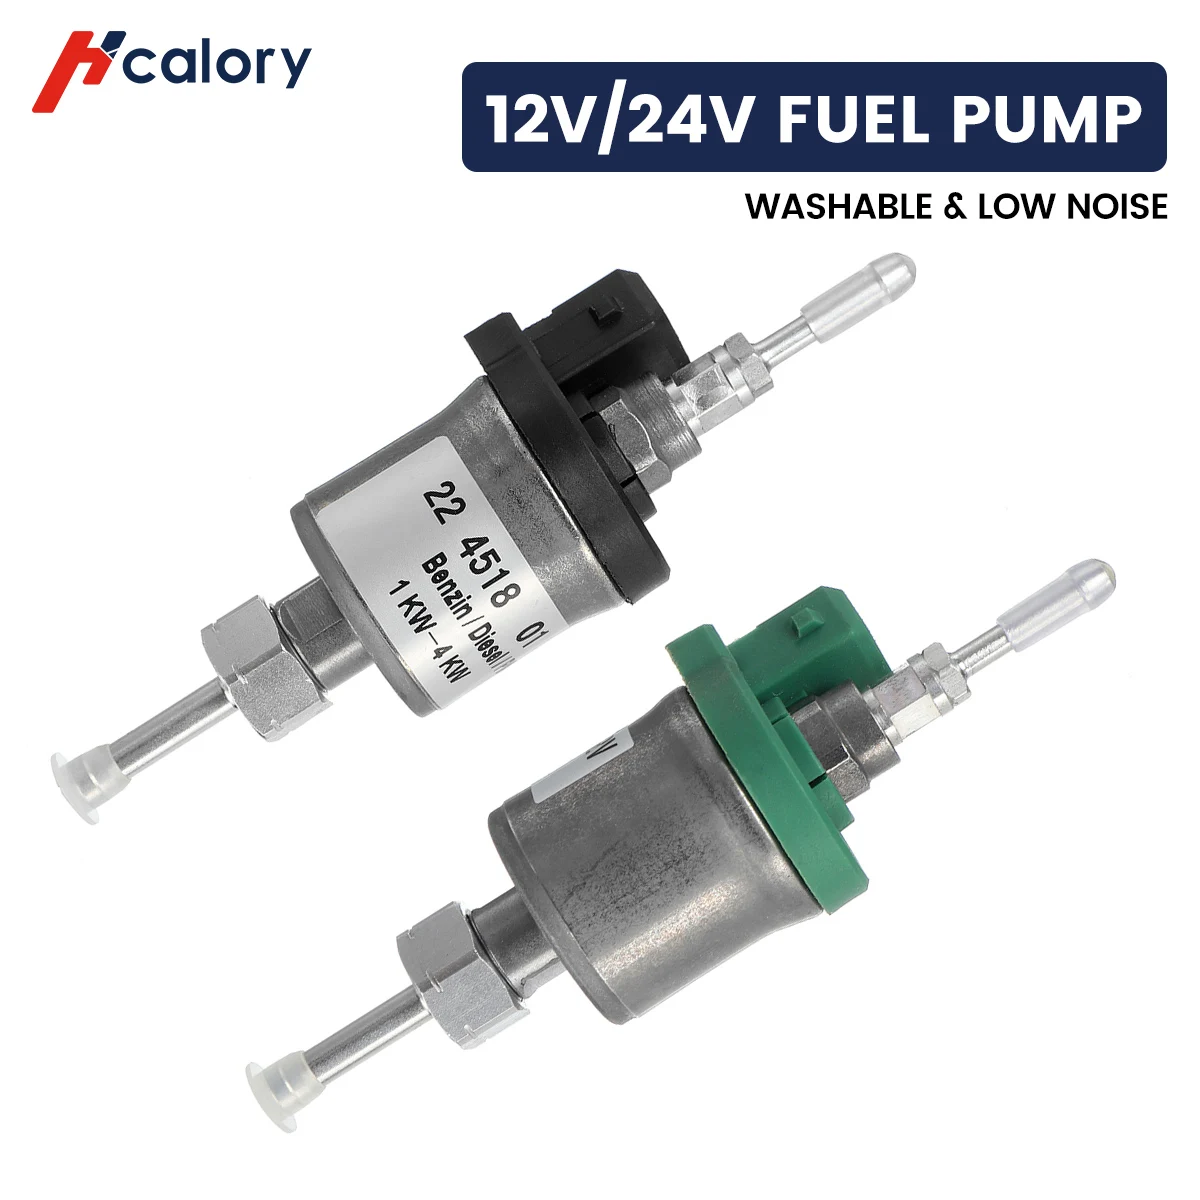 

Hcalory 12V 24V Fuel Pump 1000W- 5000W Universal Car Heater Oil Fuel Diesel Pump Air Parking Heater Car Styling Accessories